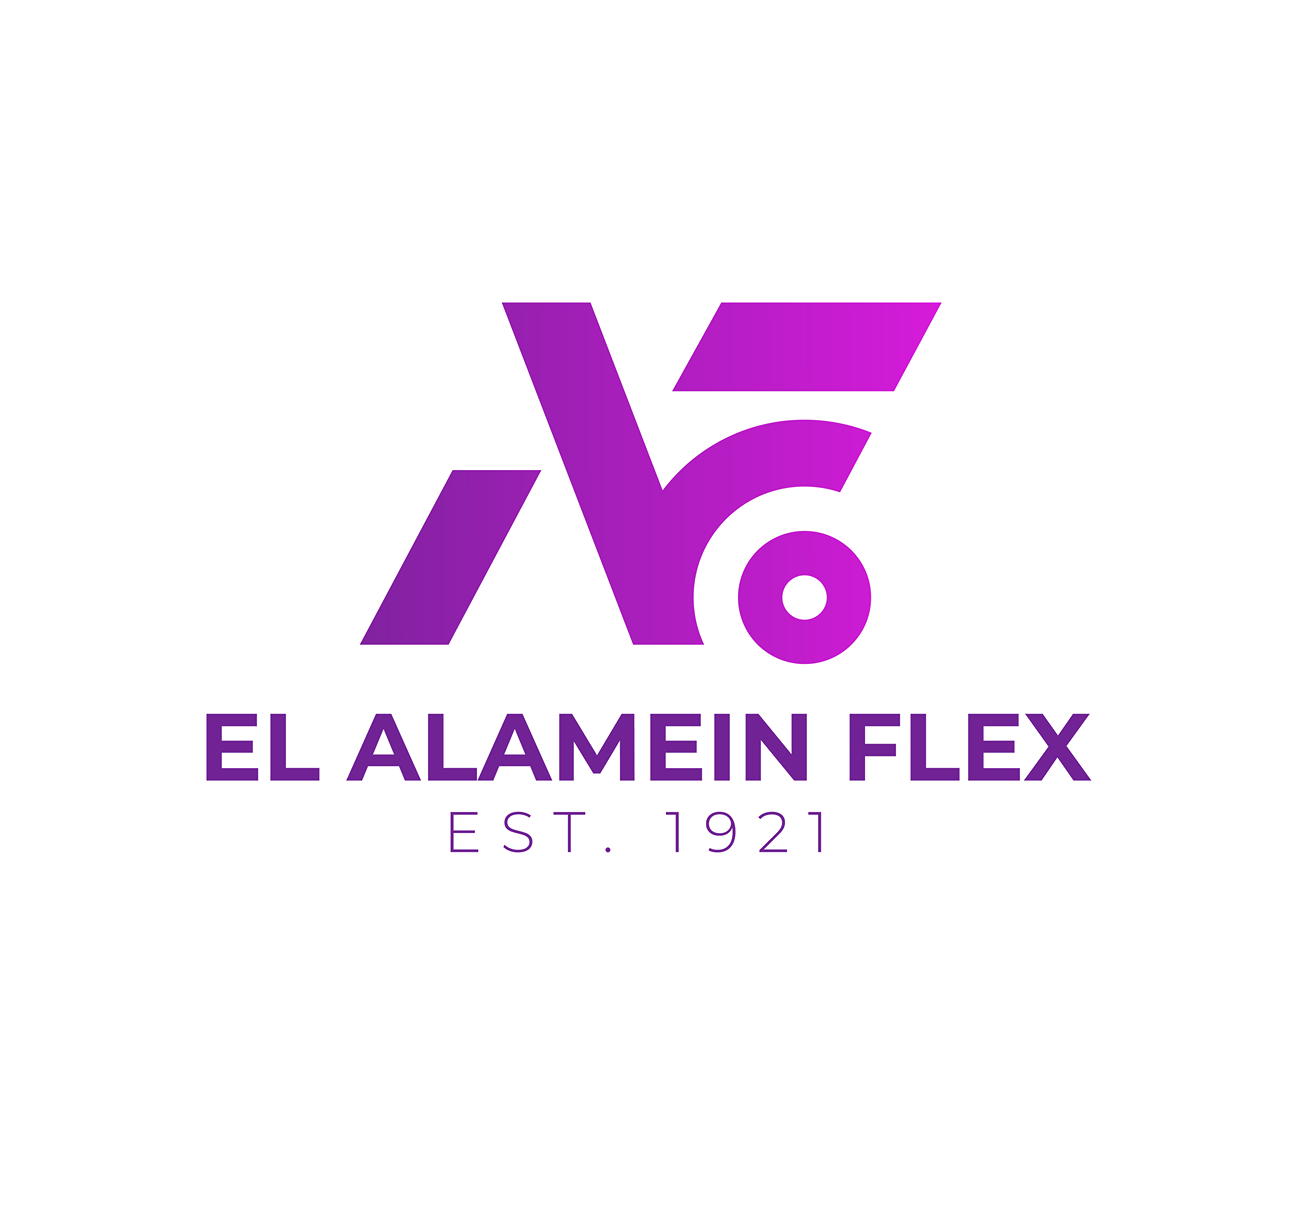 El-Alamein flex